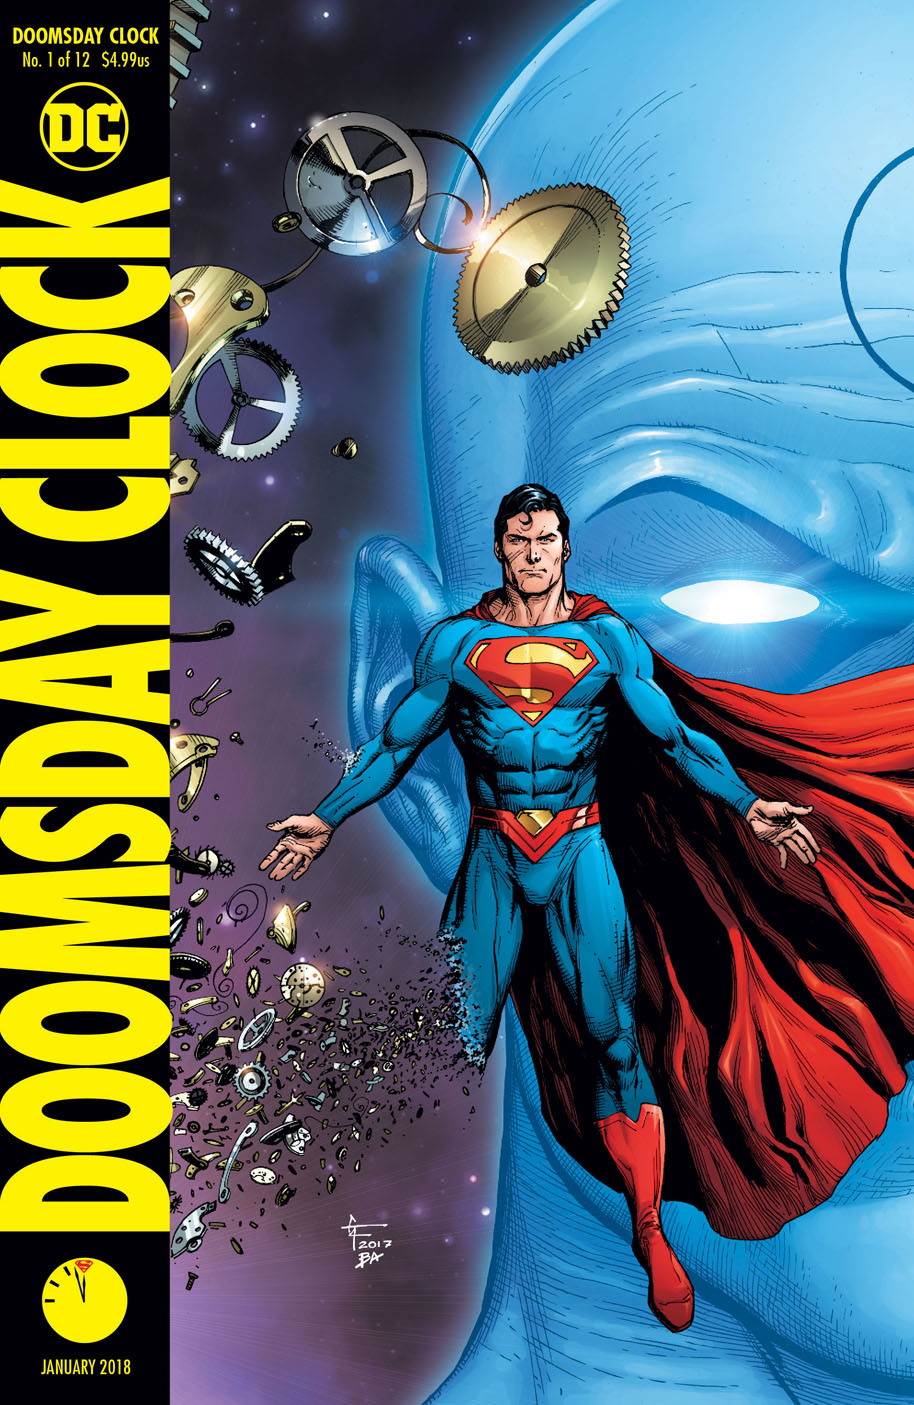 4 -  [DC COMICS] Publicaciones Universo DC: Discusión General v2 - Página 10 Variant-cover-of-doomsday-clock-1-with-superman-and-doctor-manhattan